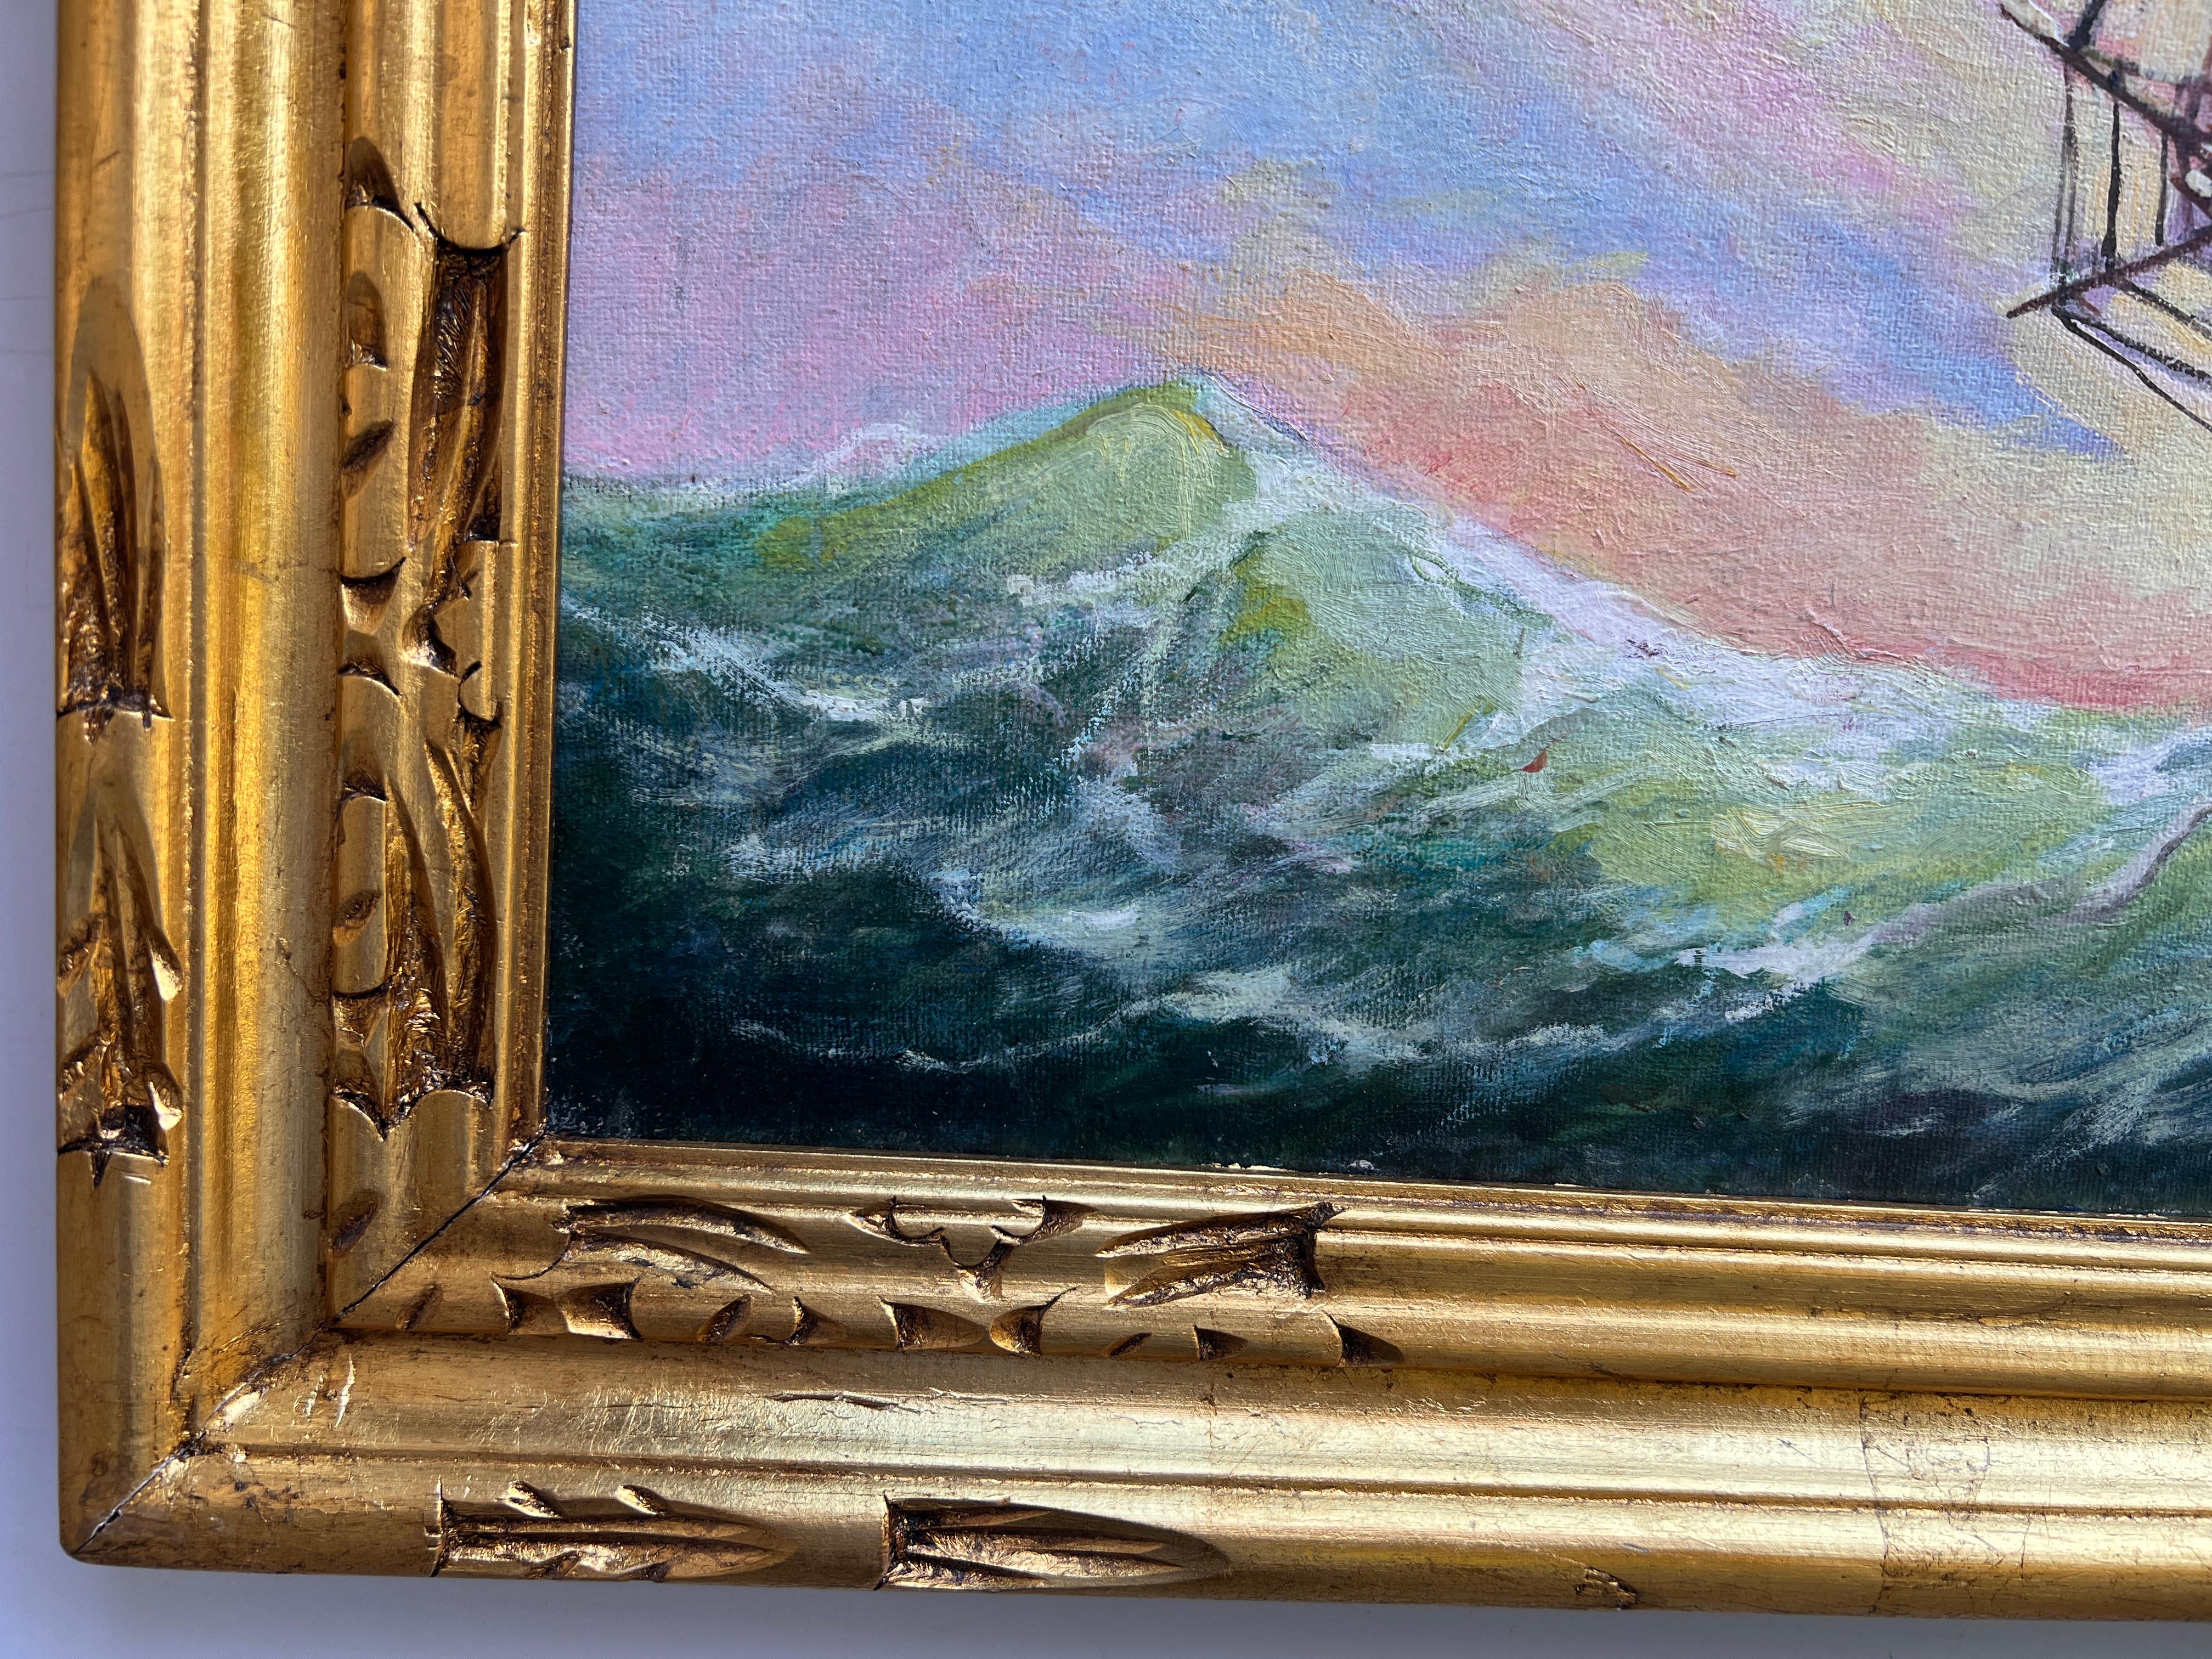 Artist Dobritsin Oil painting on canvas, seascape, 